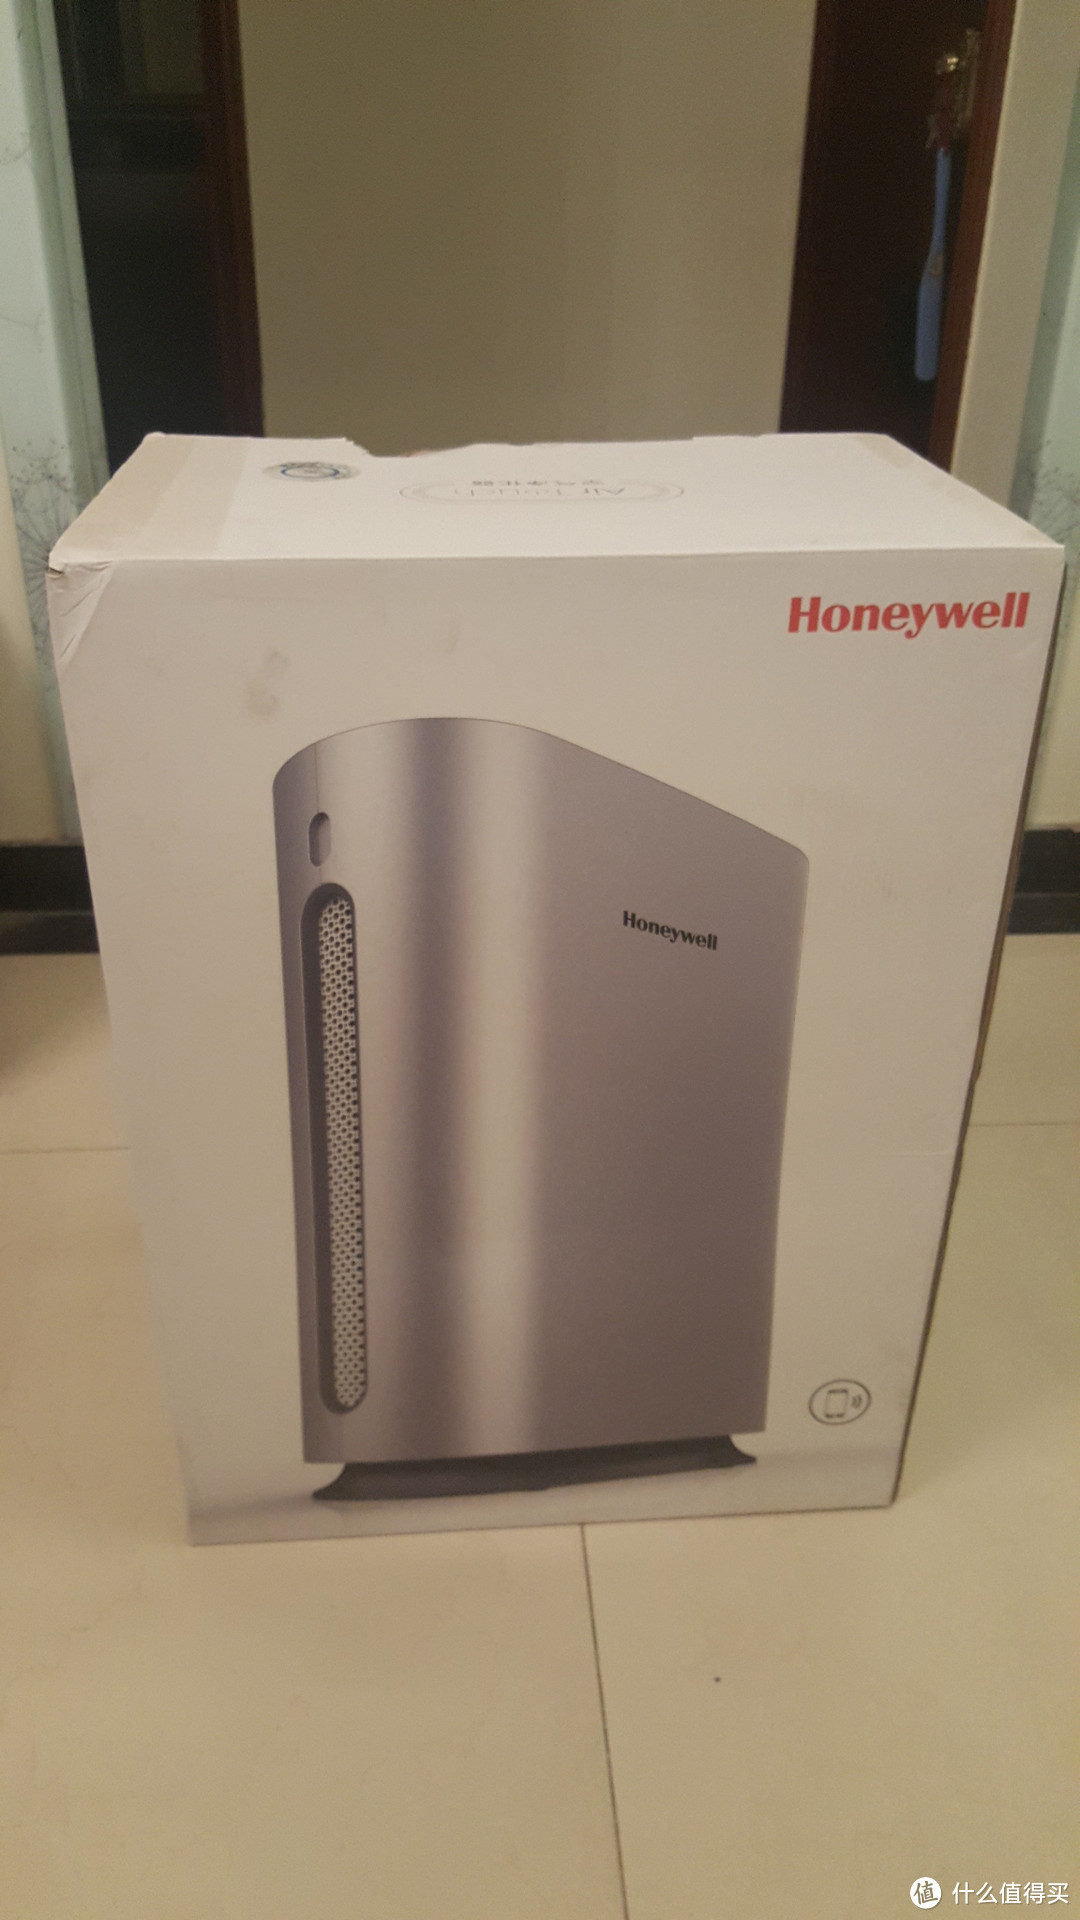 Honeywell 霍尼韦尔 智能空气净化器 开箱及使用感受